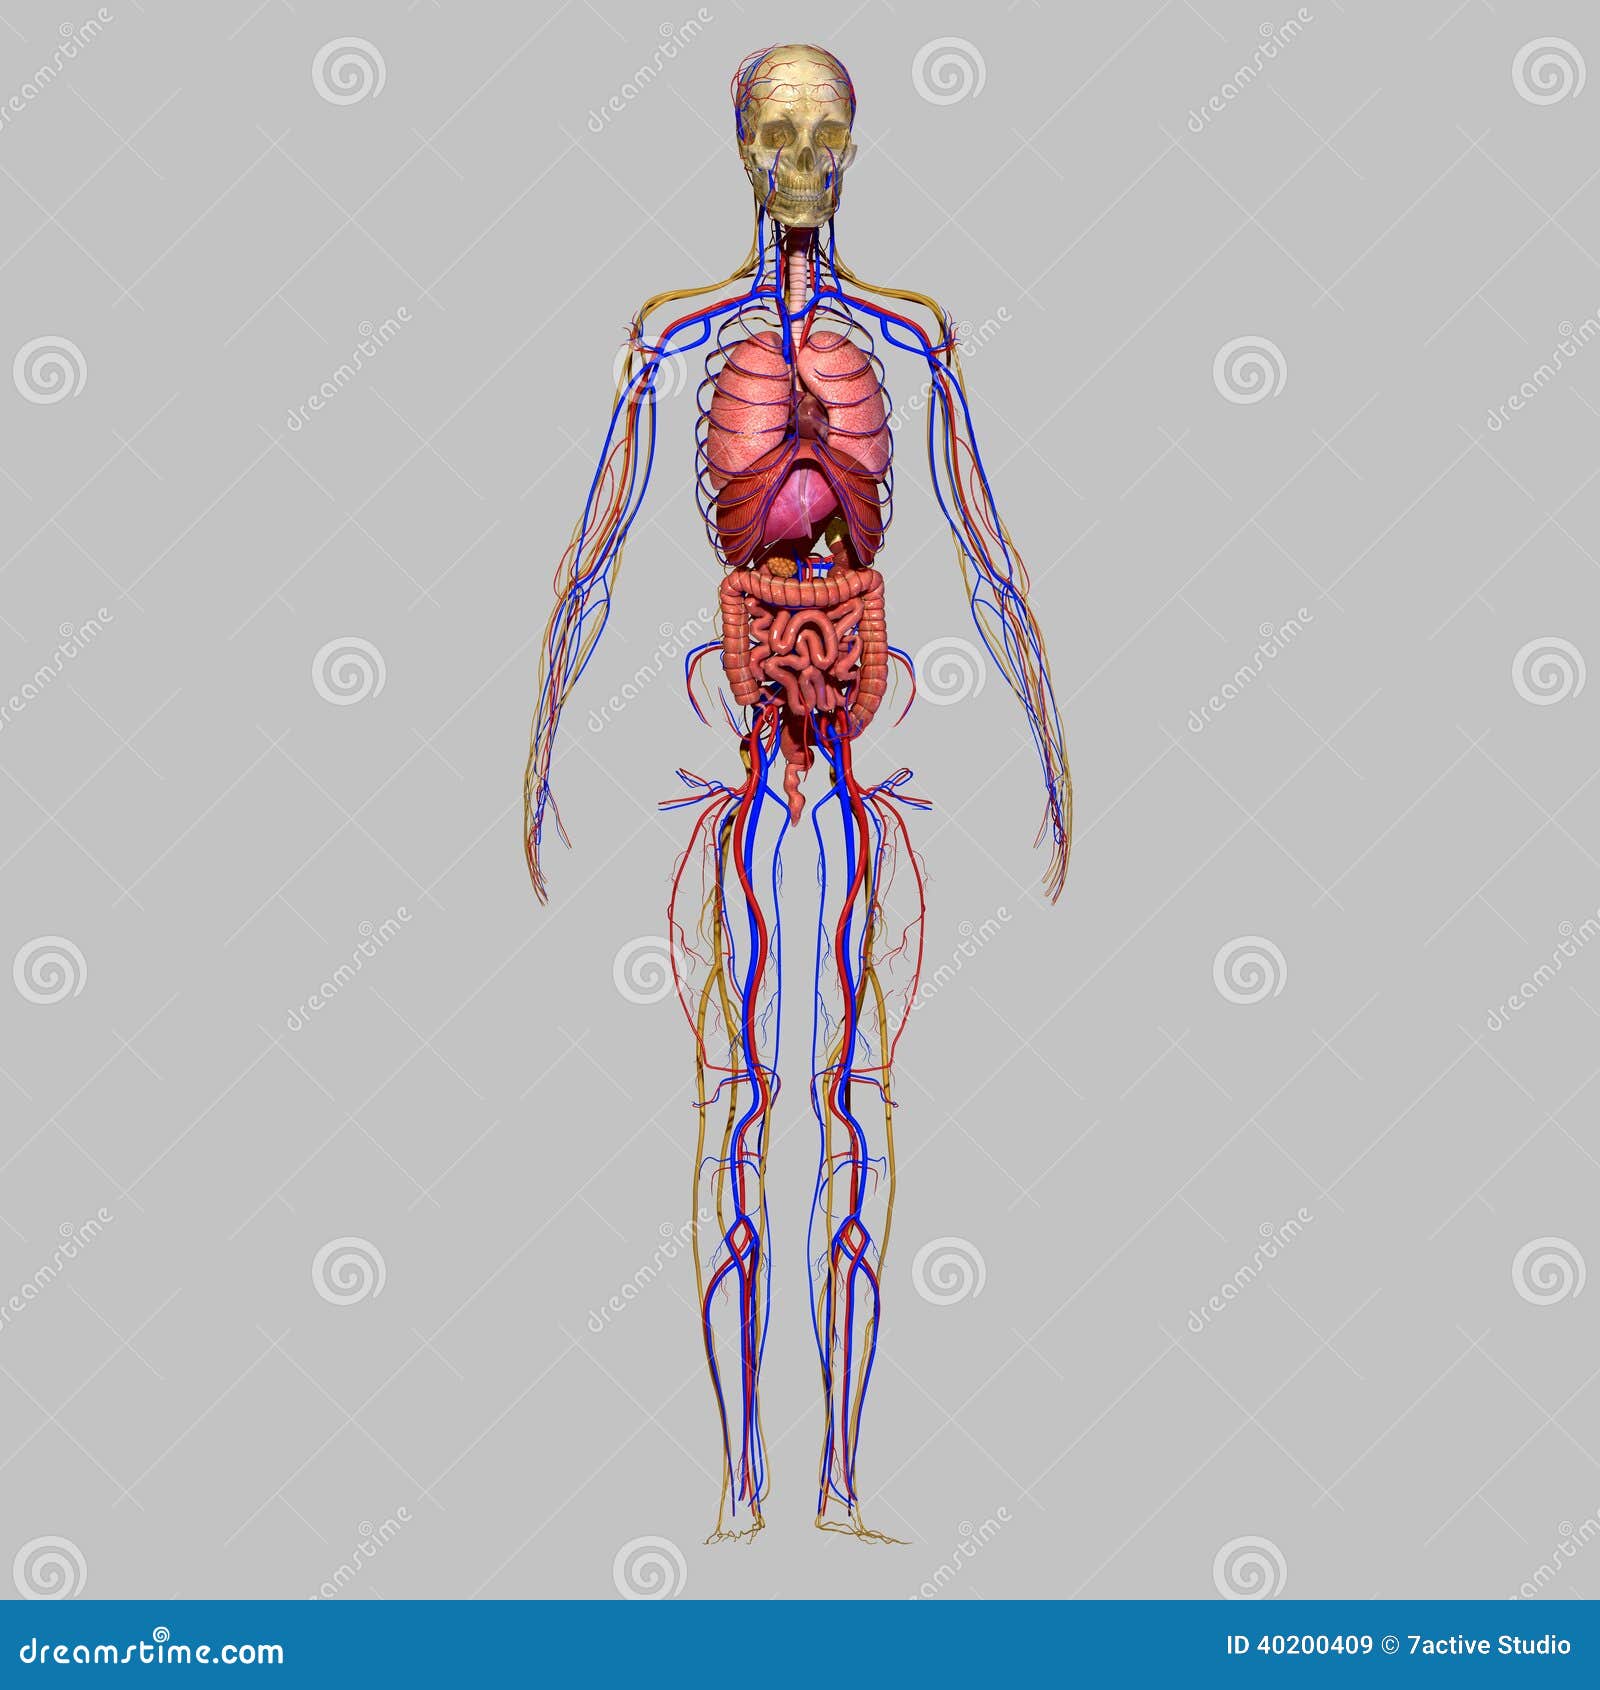 Human Anatomy stock illustration. Illustration of back - 40200409